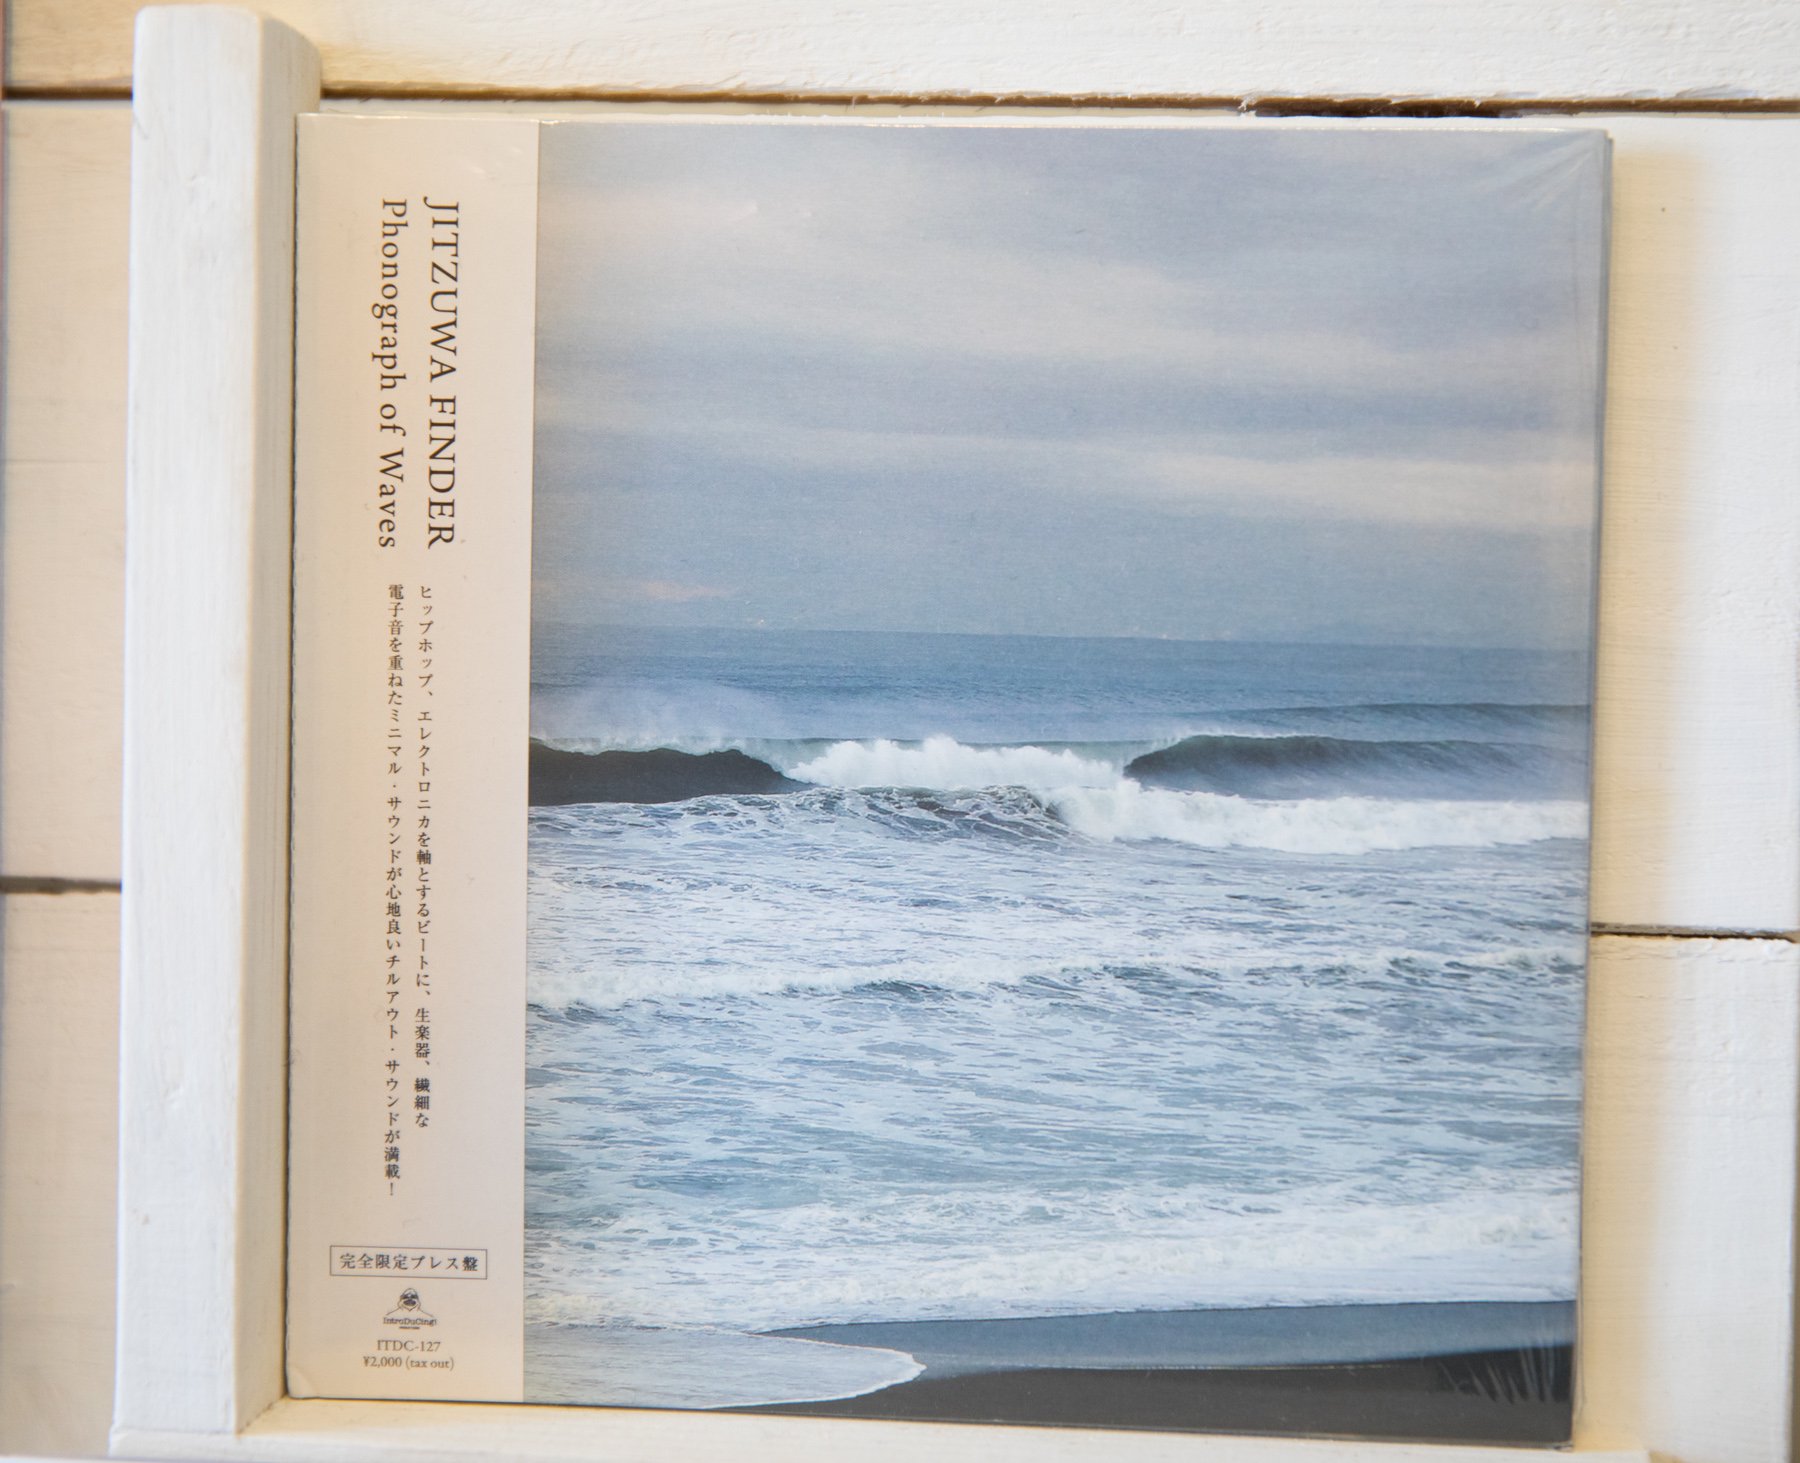 Phonograph of Waves(CD)  Jitzuwa Finder